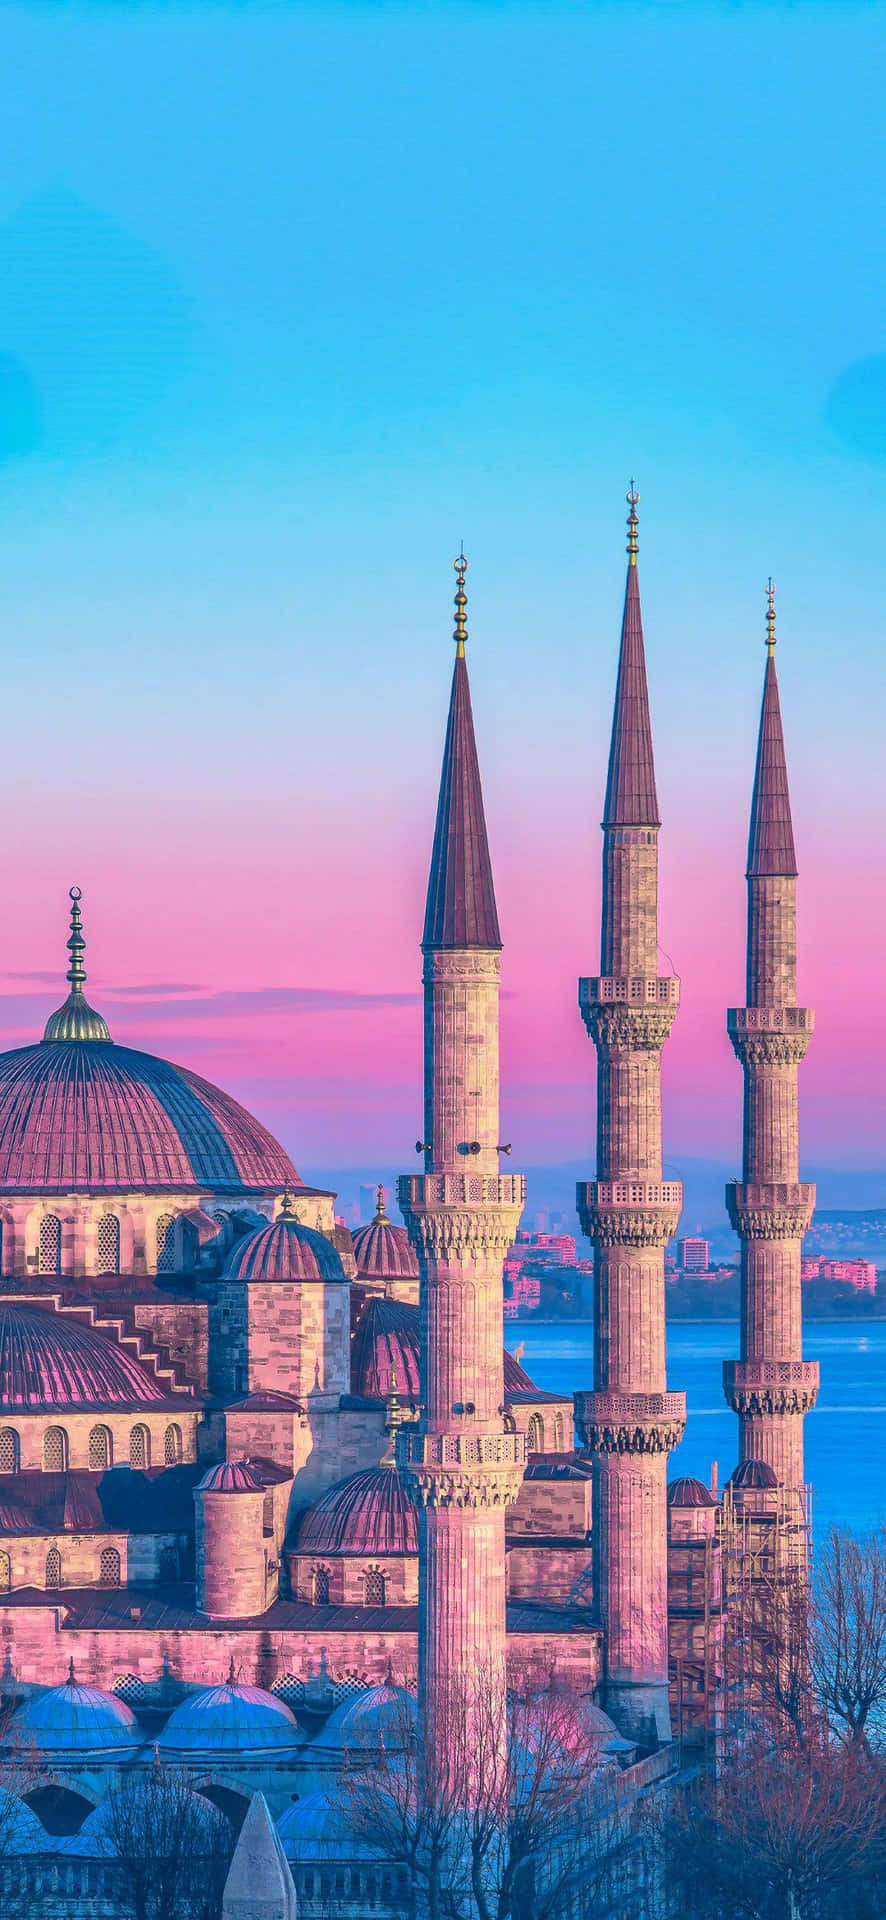 Istanbul Mosque Spiresat Sunset Wallpaper